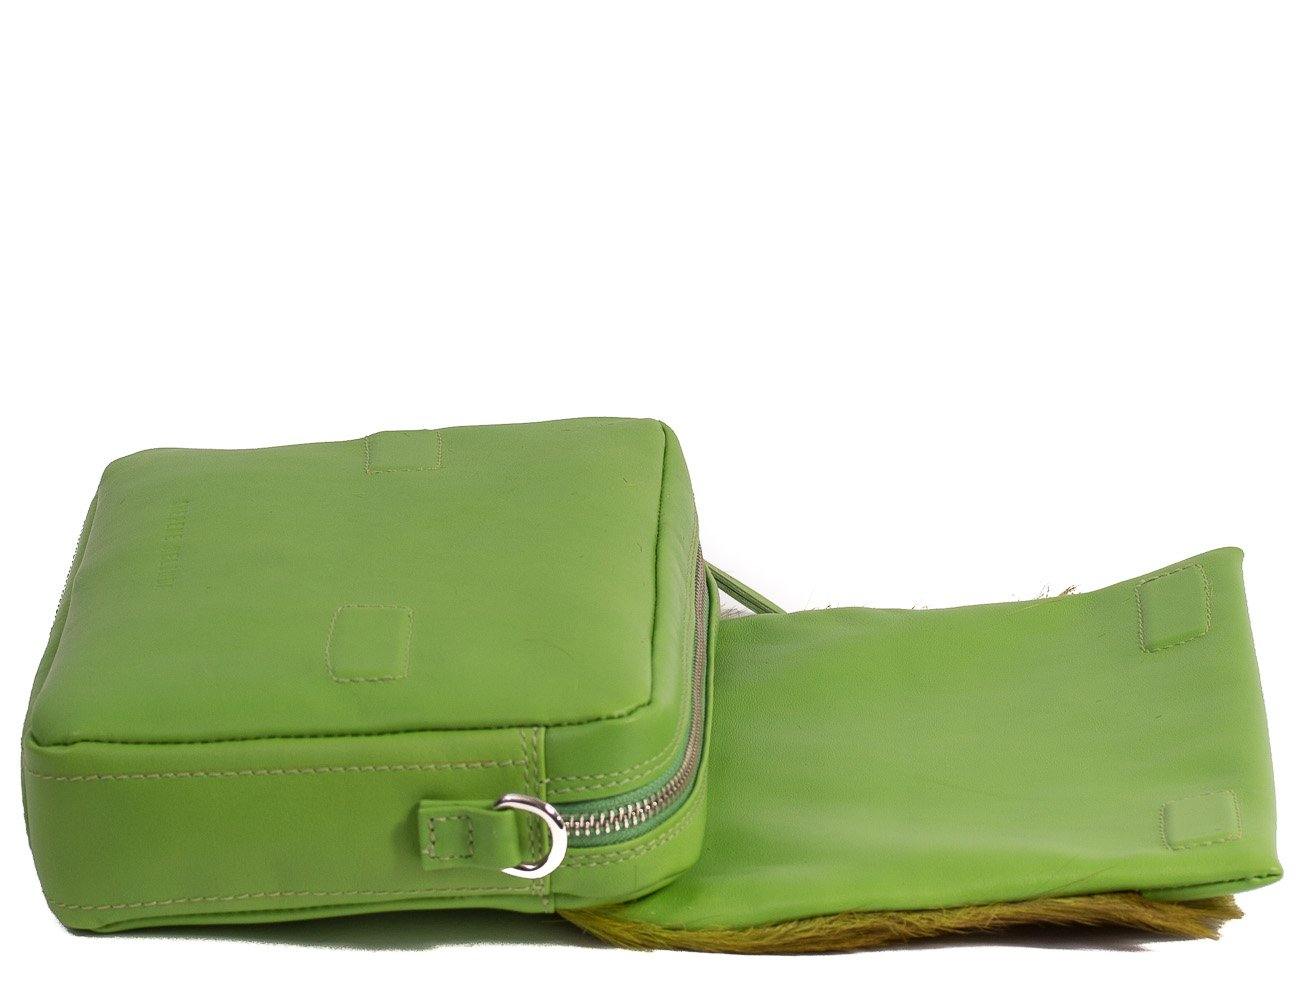 sherene melinda springbok hair-on-hide lime green leather shoulder bag open